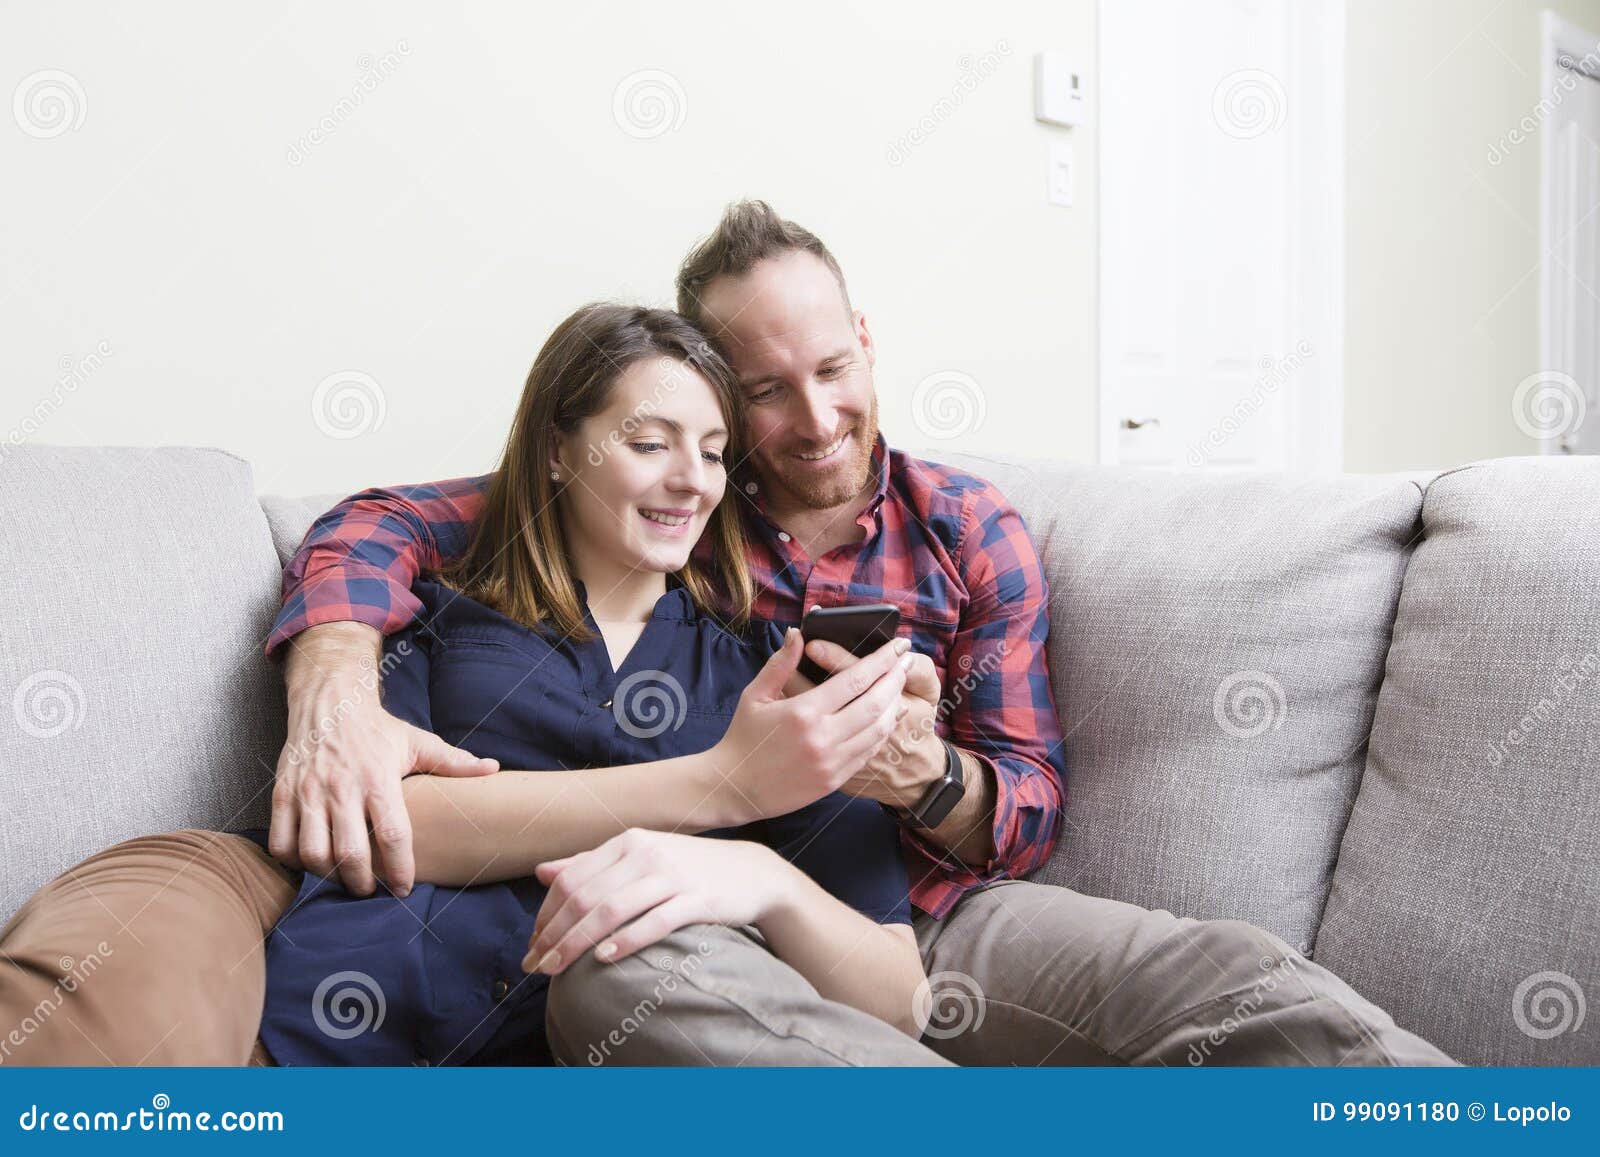 couch having young seks couple Amateur